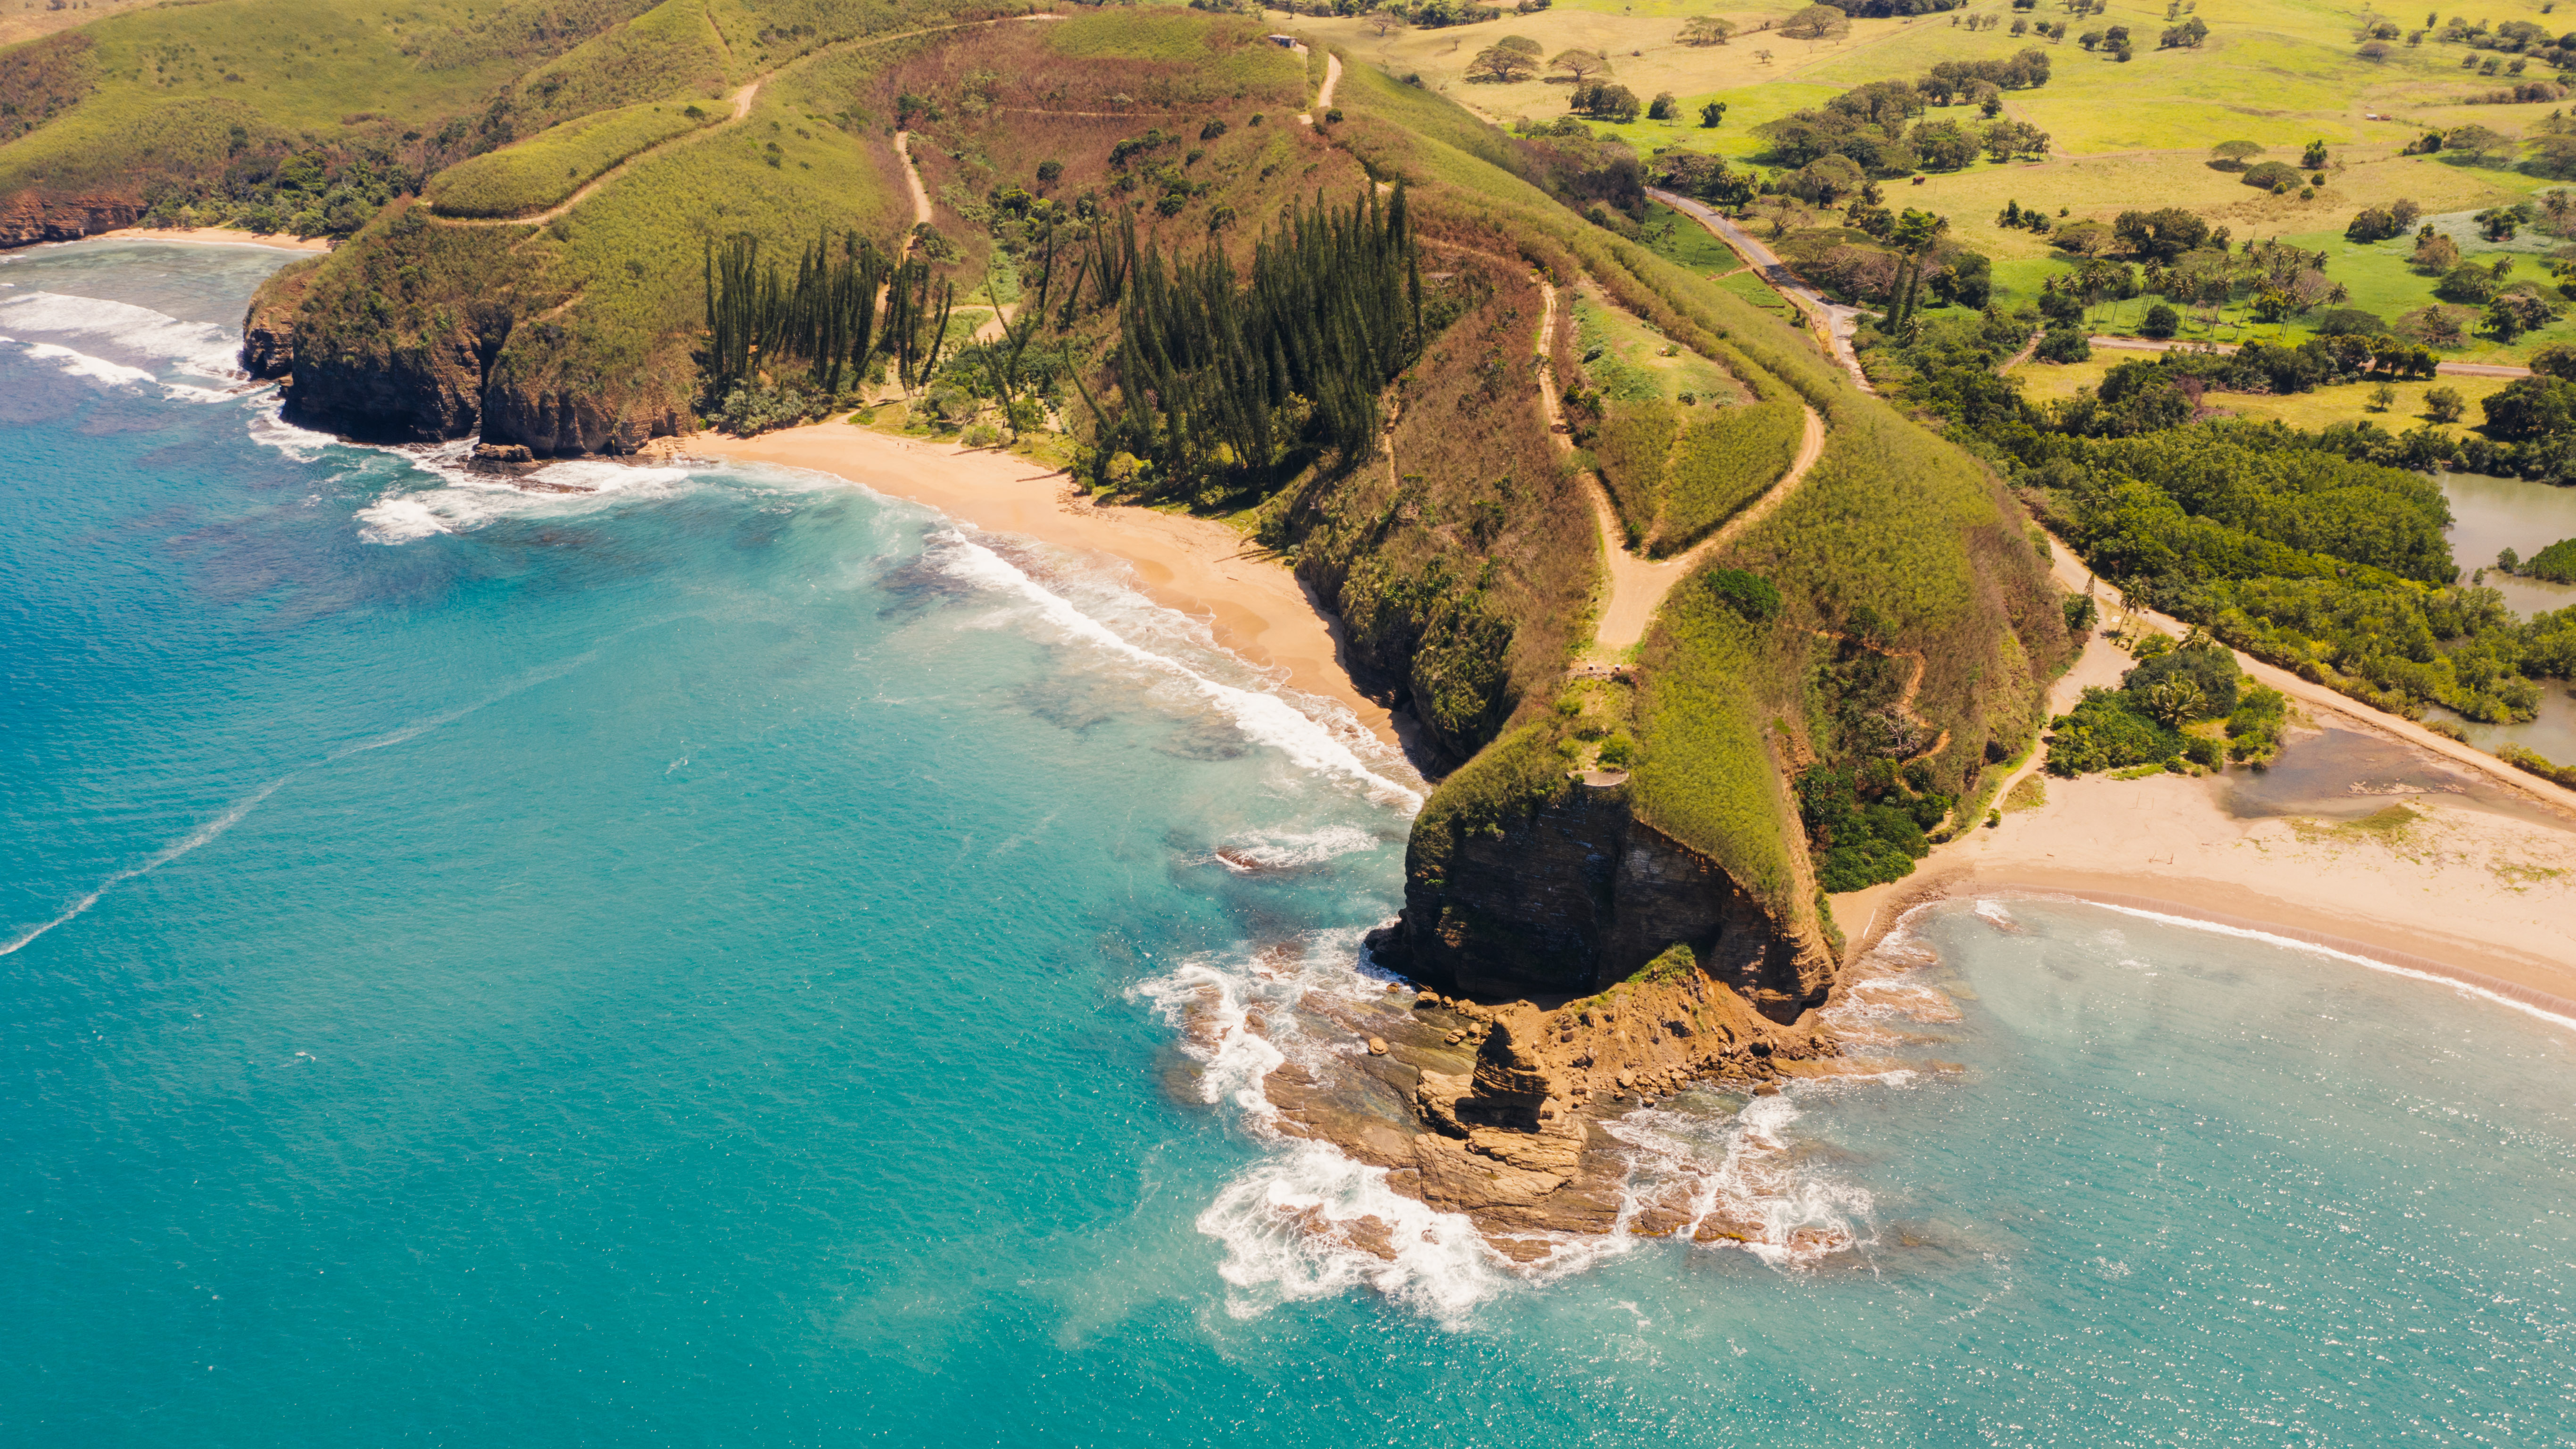 aerial view of cliff edge along coastline